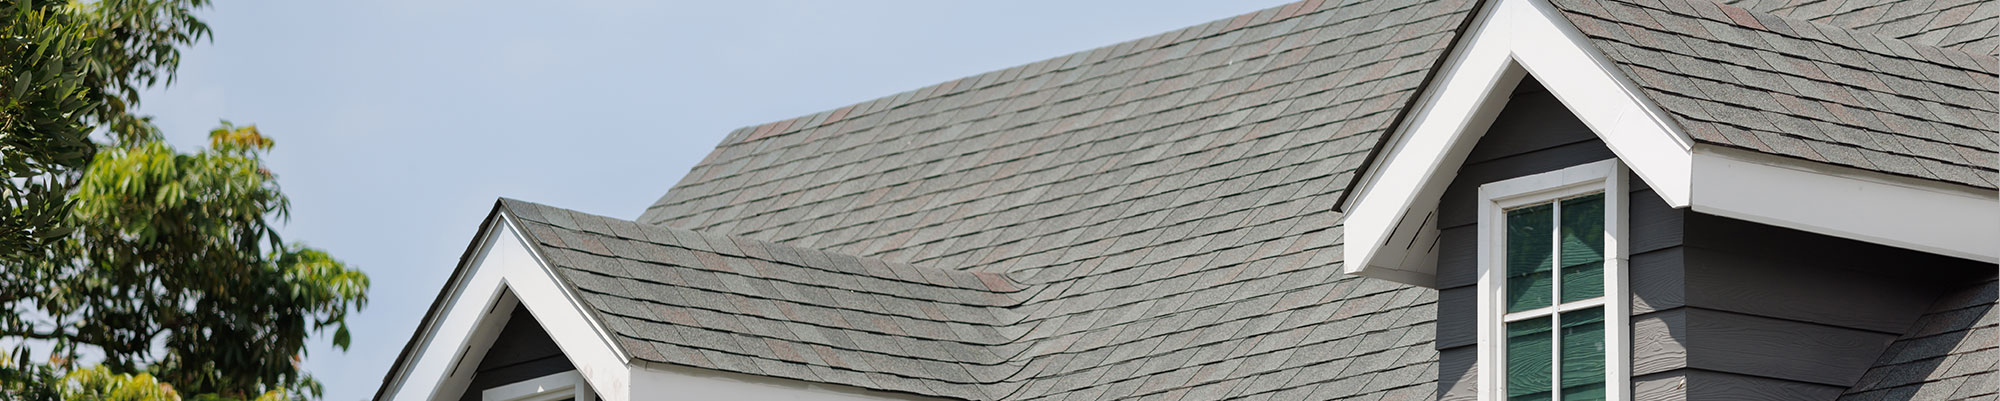 Racine roof replacement company